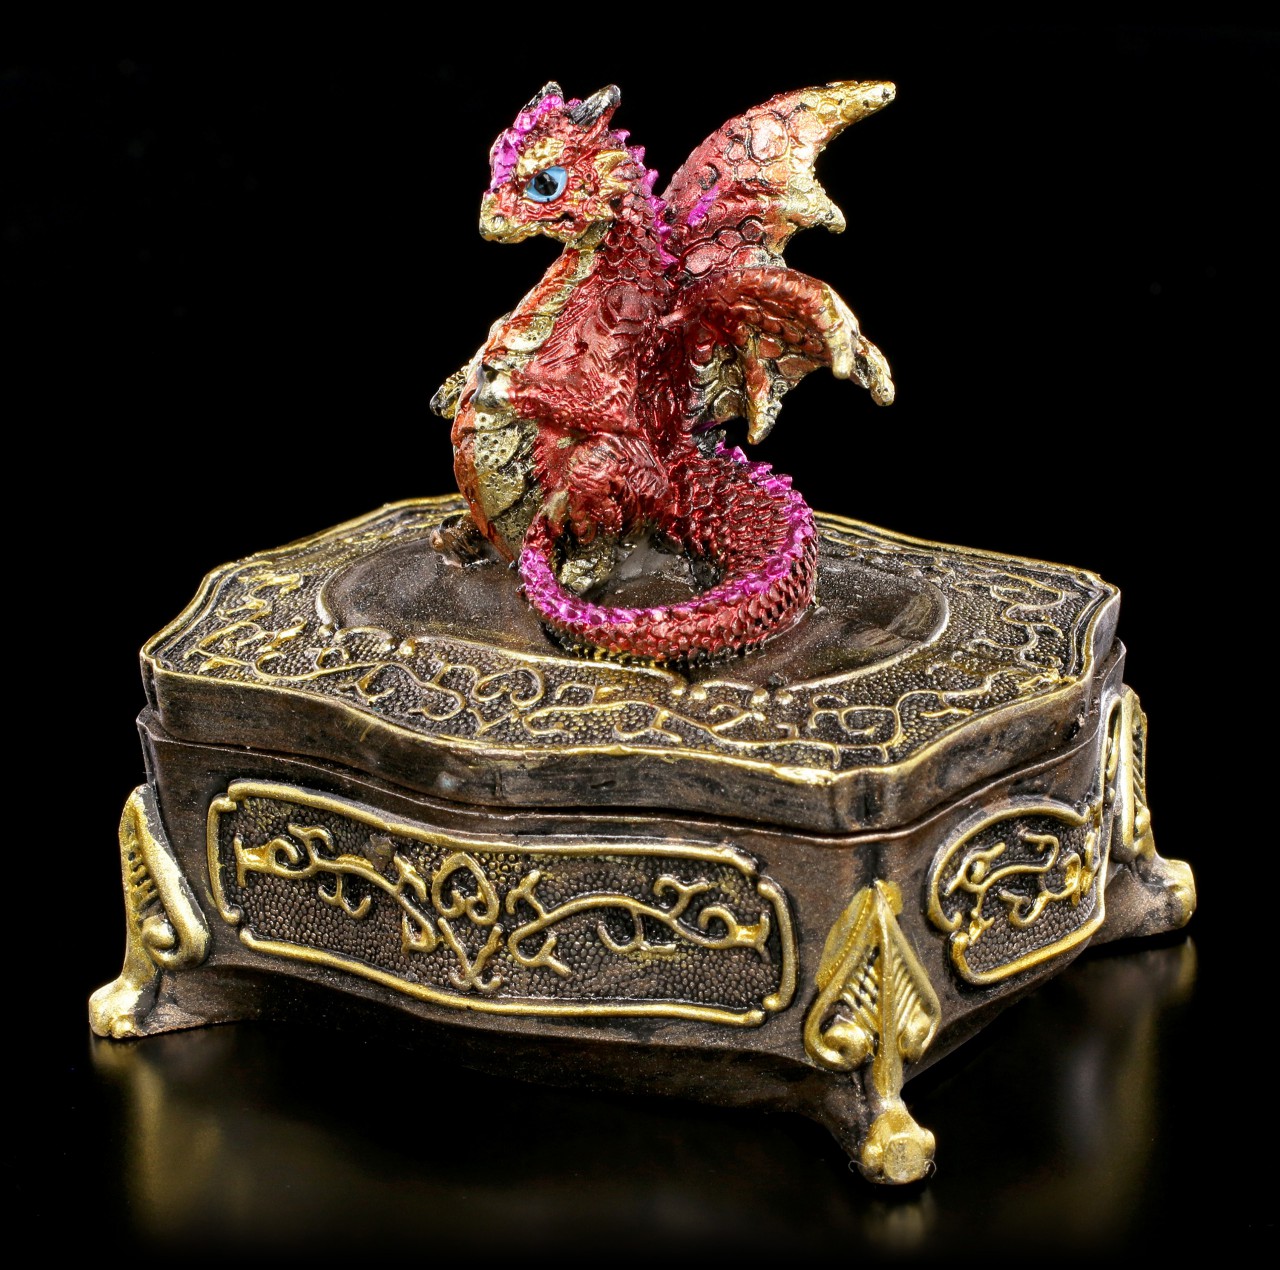 Dragon Box - Never Mind!